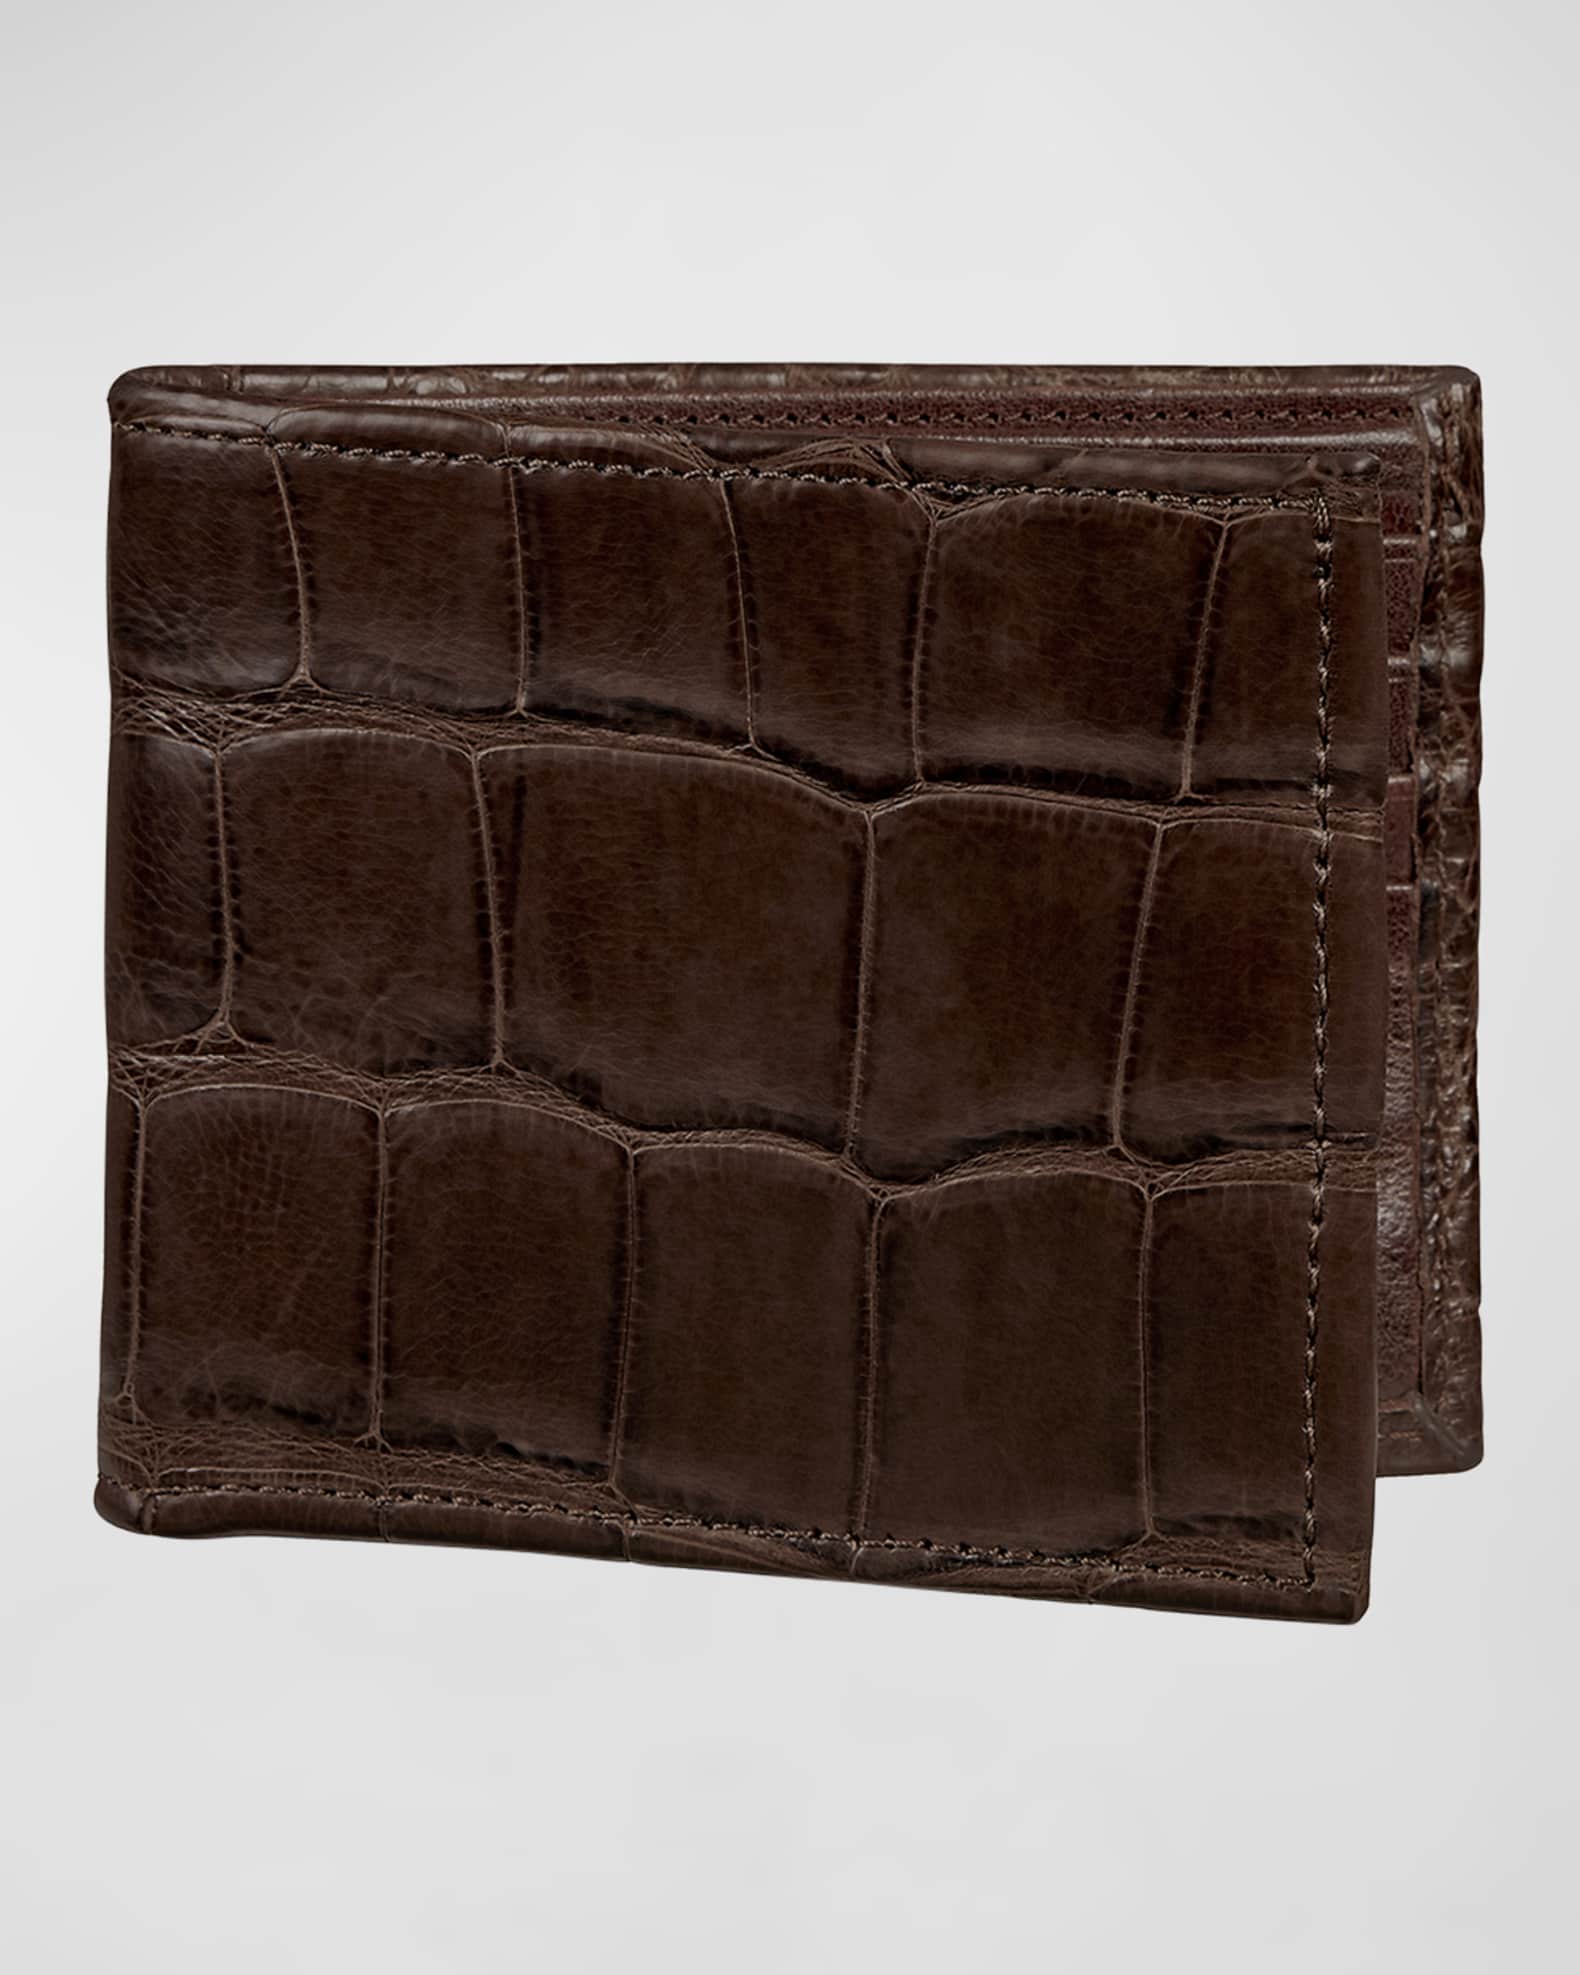 genuine Crocodile Pattern Leather Wallet Men Black Brown Thin Male